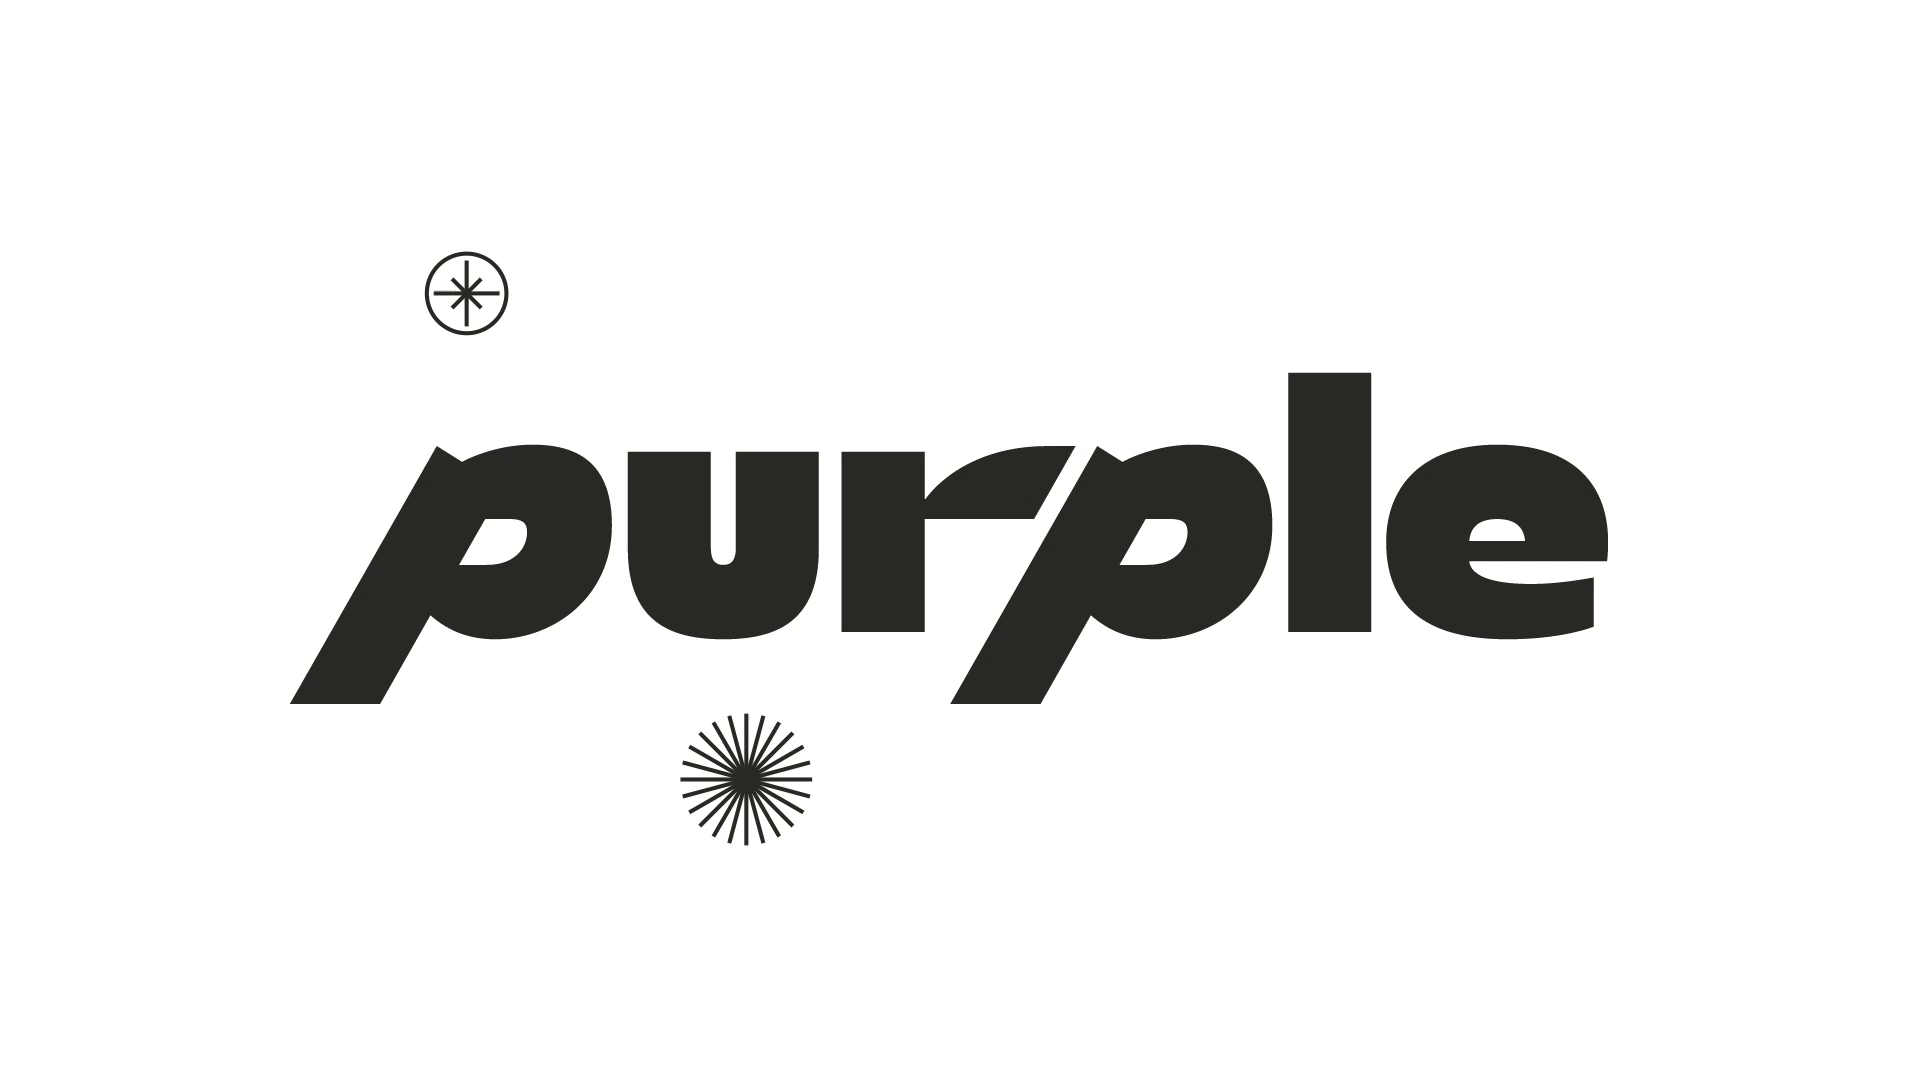 Purple brand identity by ESH gruppa on Dribbble